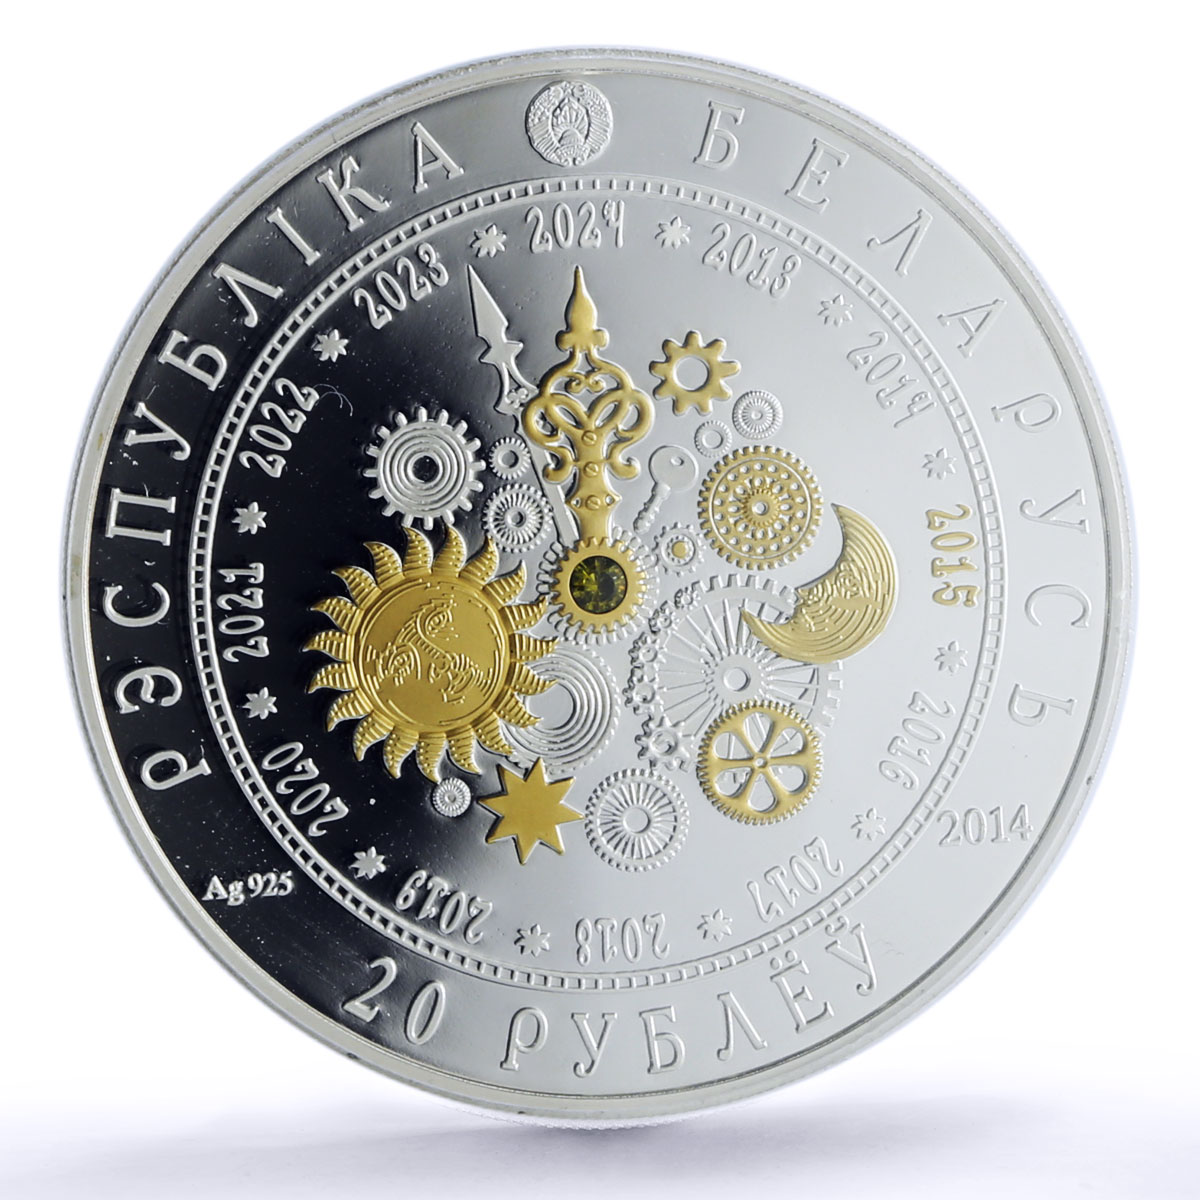 Belarus 20 rubles Lunar Calendar series Year of Goat PL70 PCGS silver coin 2014